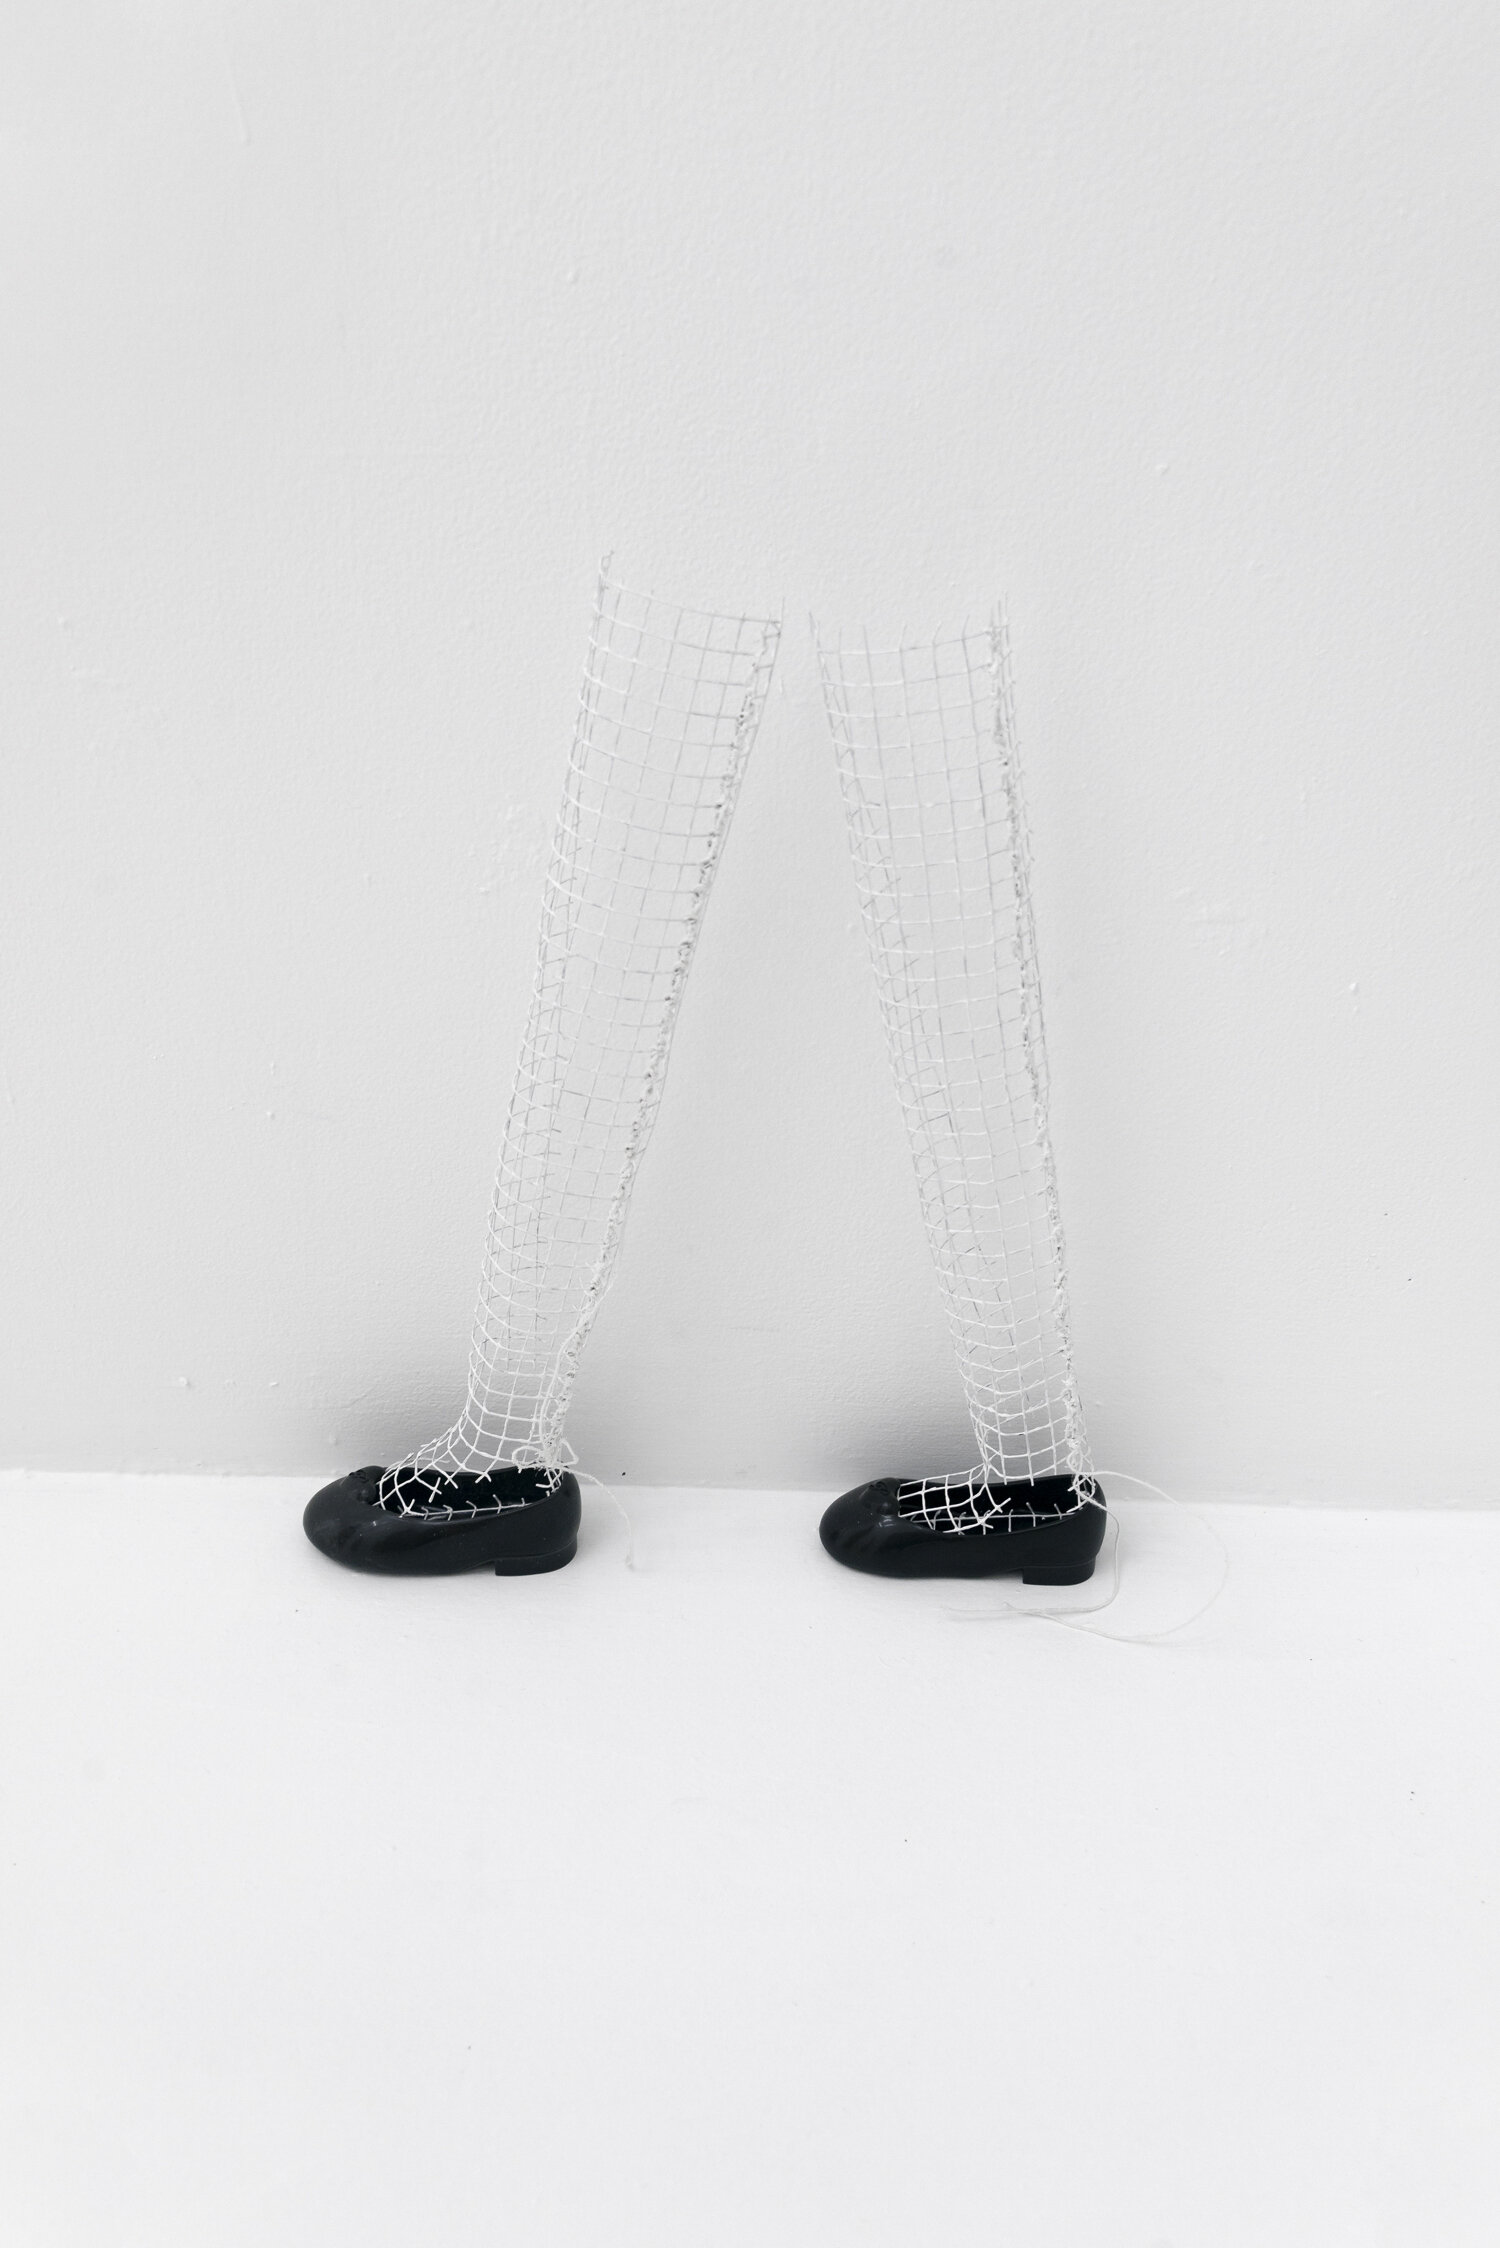   Tall Polio Legs , 2019. Doll shoes, steel, nylon thread, acrylic paint.  